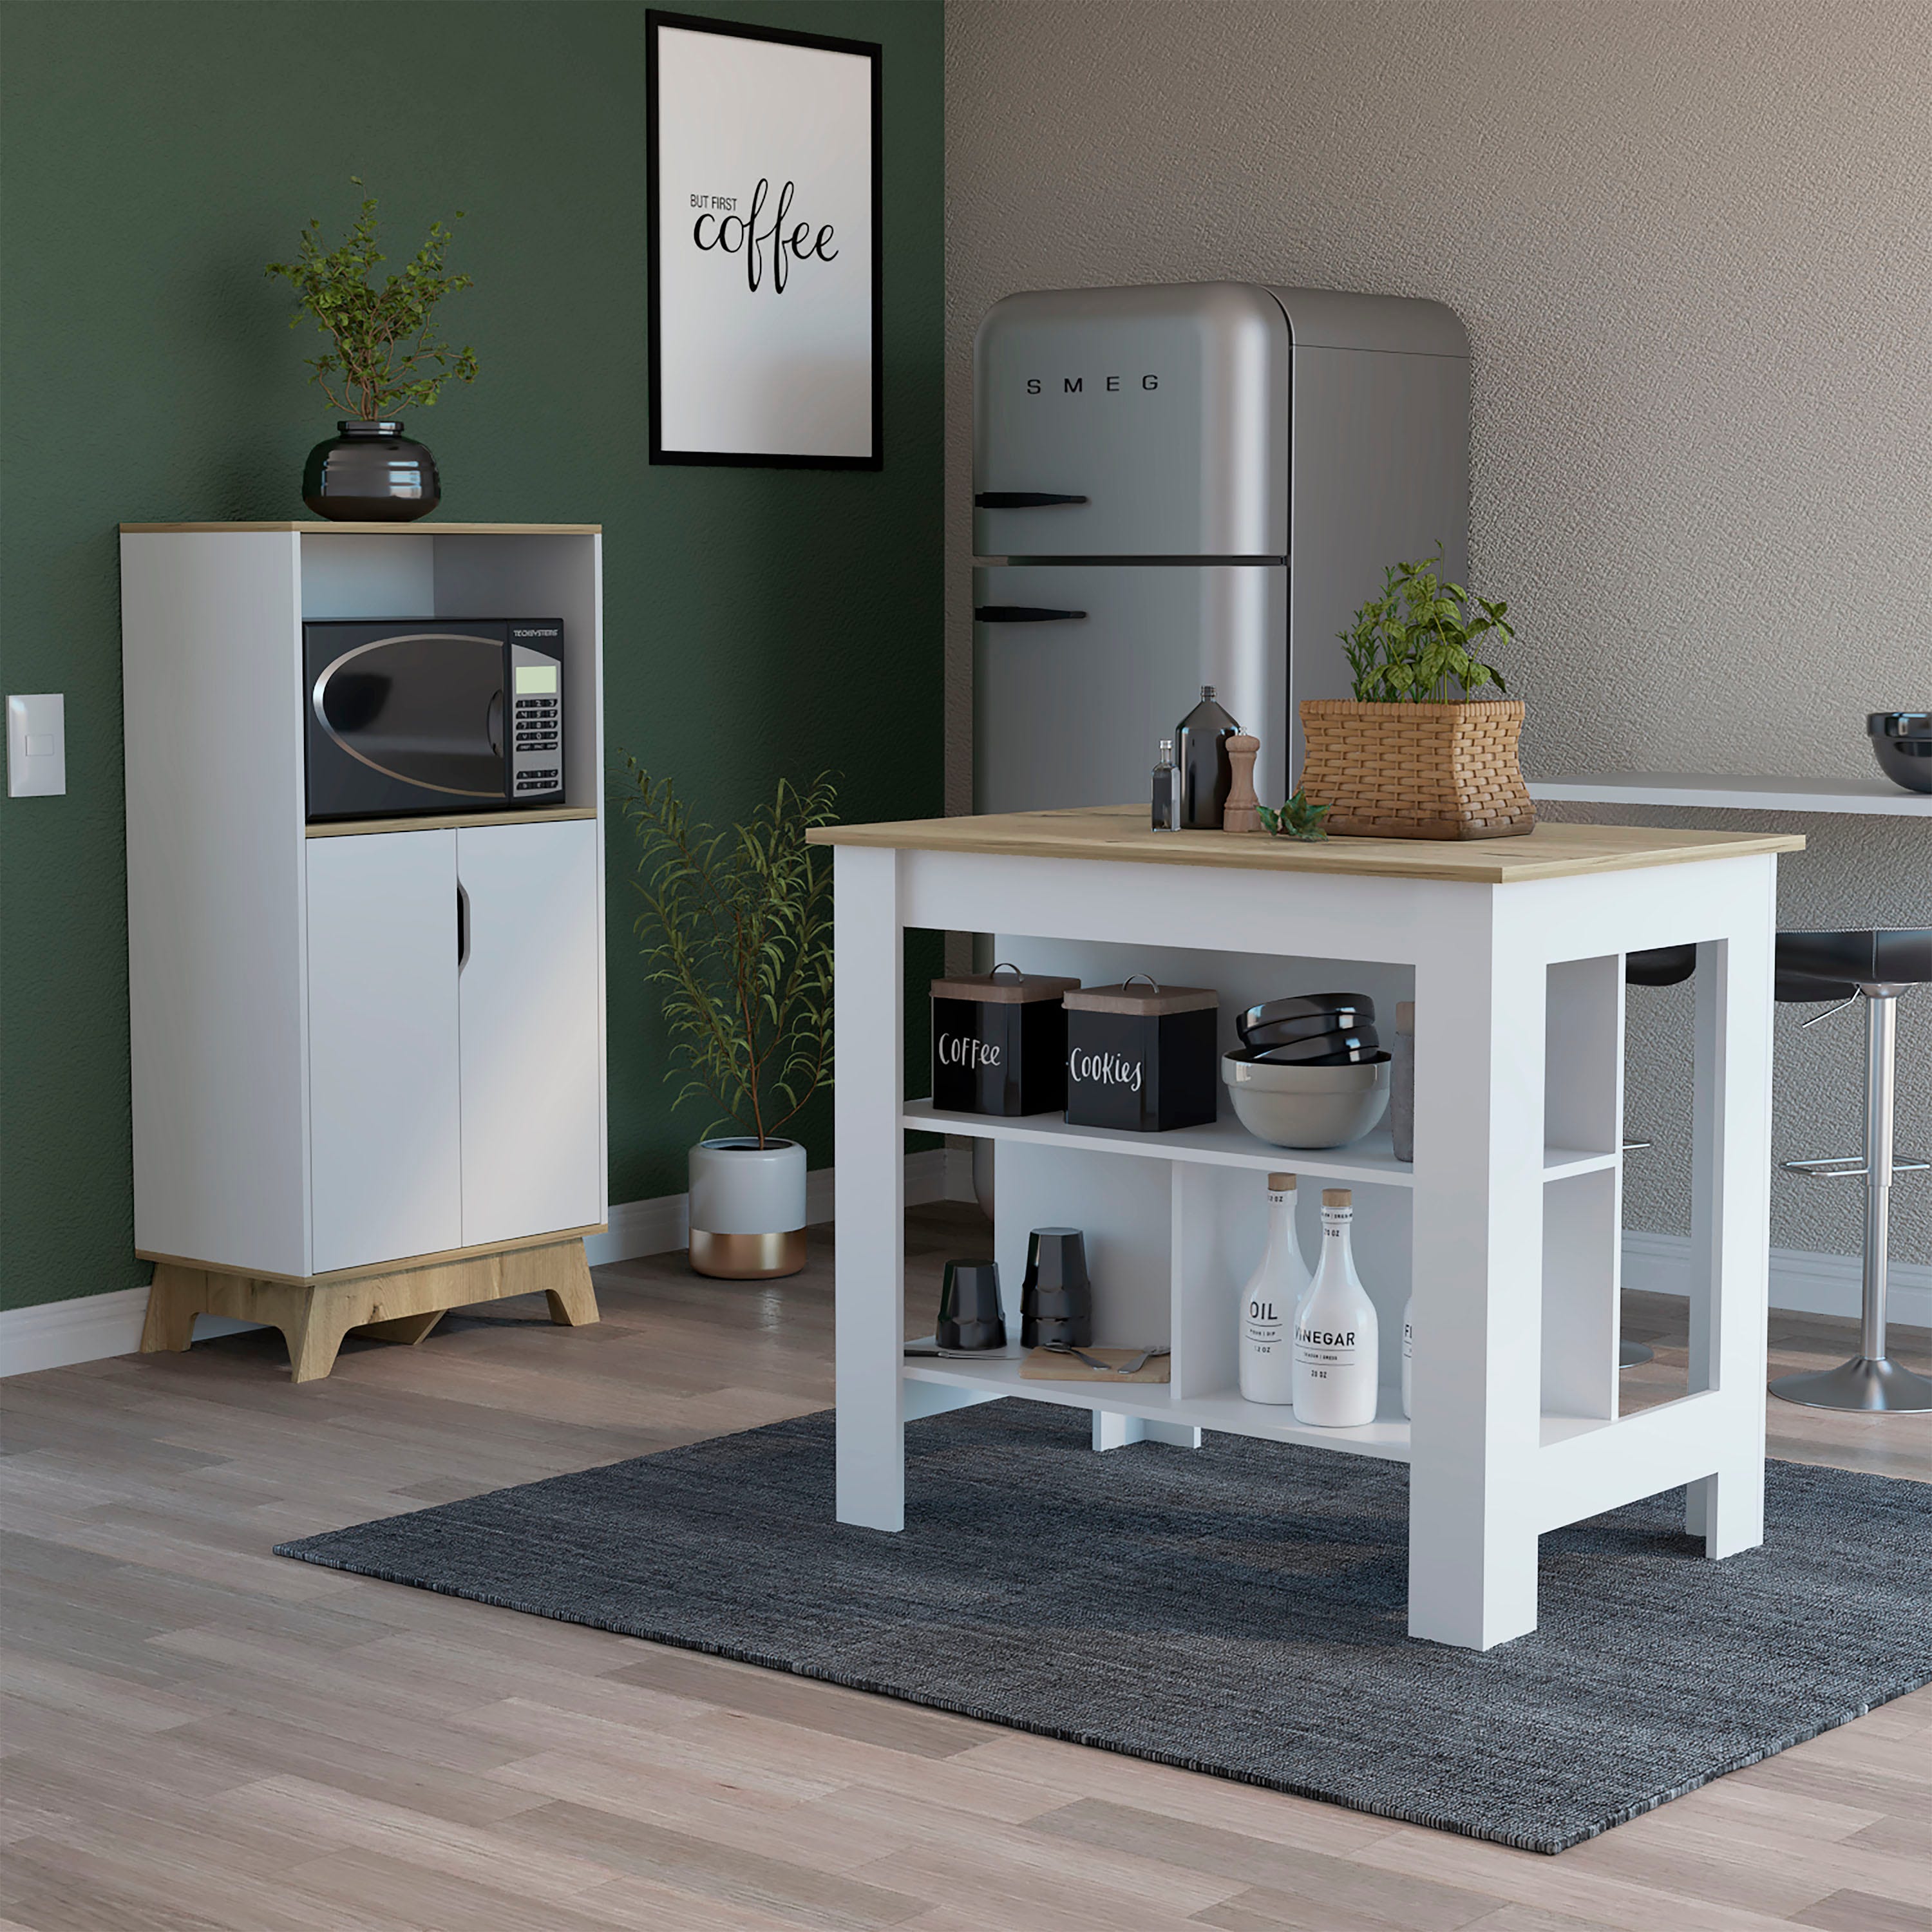 Combo Kitchen 7 Mueble Microondas + Optimizador - Blanco